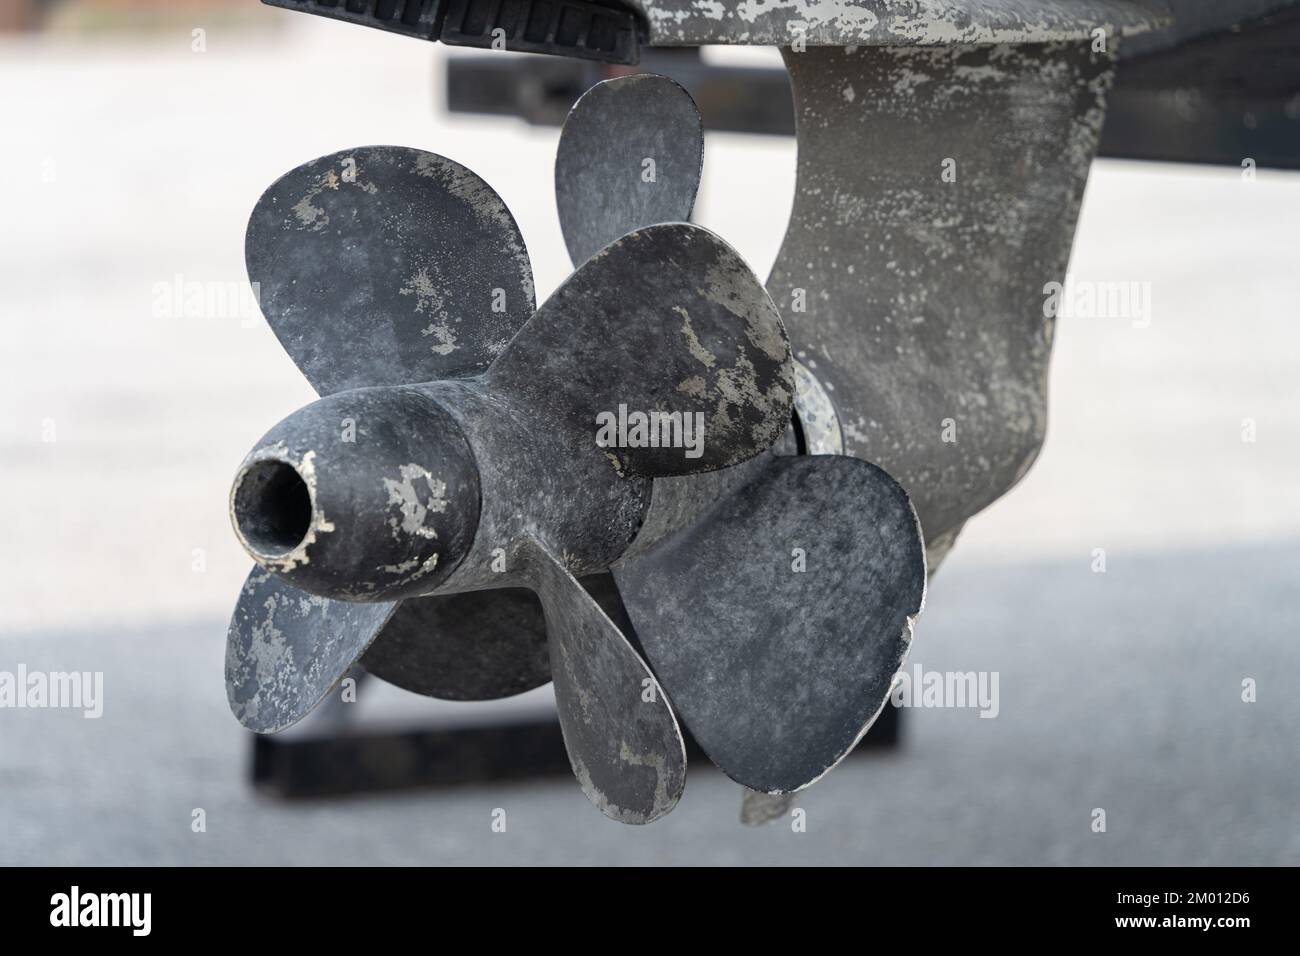 Image of Old rusty metal boat engine thruster turbine Stock Photo